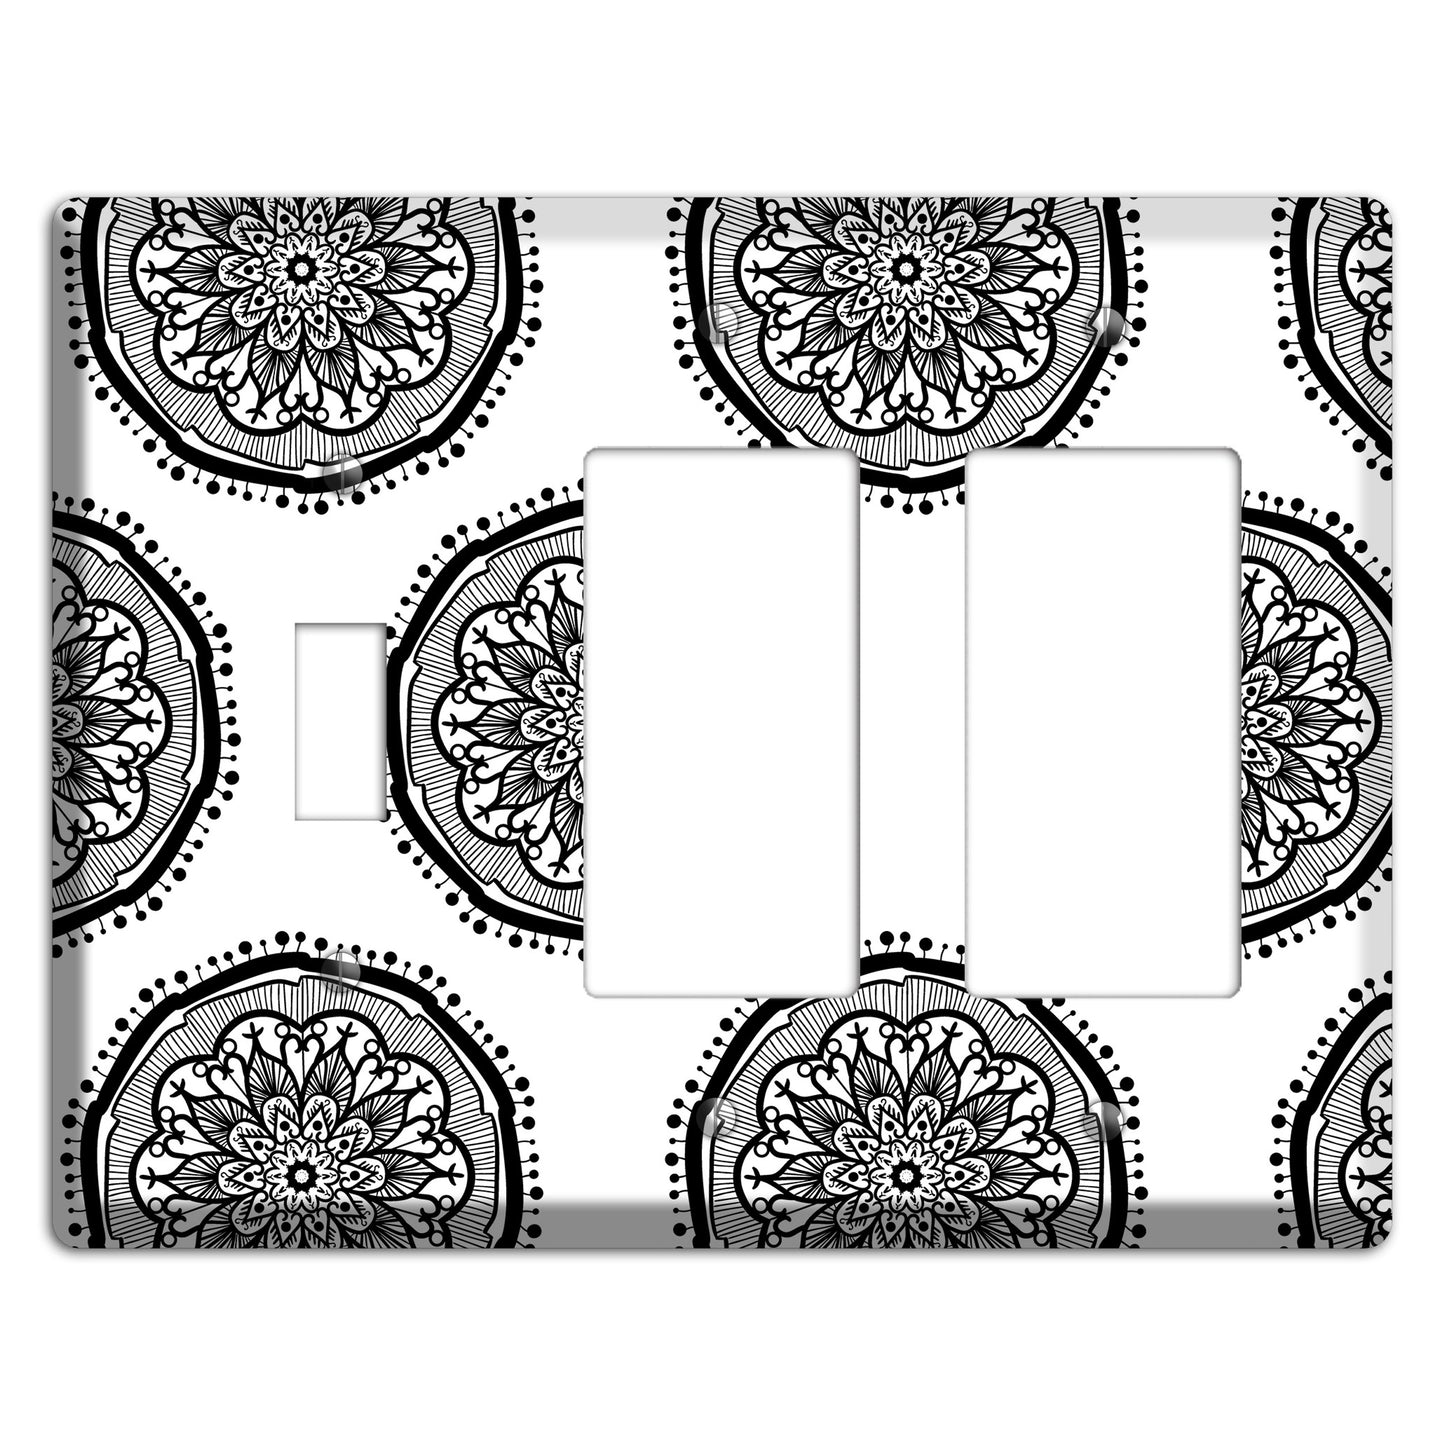 Mandala Black and White Style R Cover Plates Toggle / 2 Rocker Wallplate